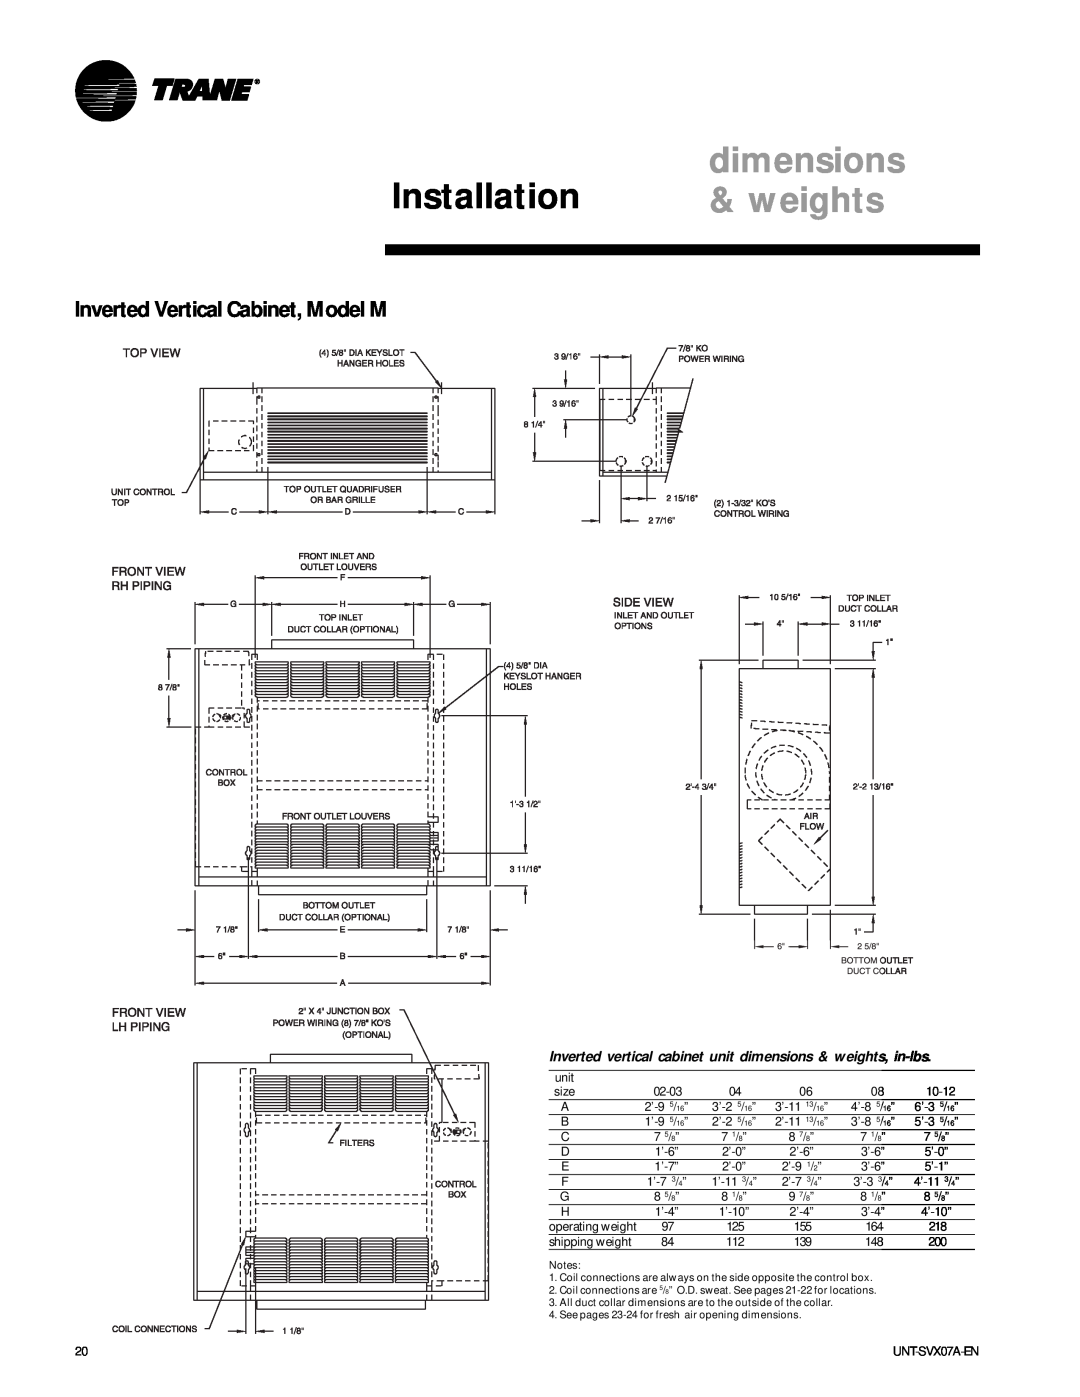 Trane UNT-SVX07A-EN manual Inverted Vertical Cabinet, Model M, Installation, dimensions, weights 